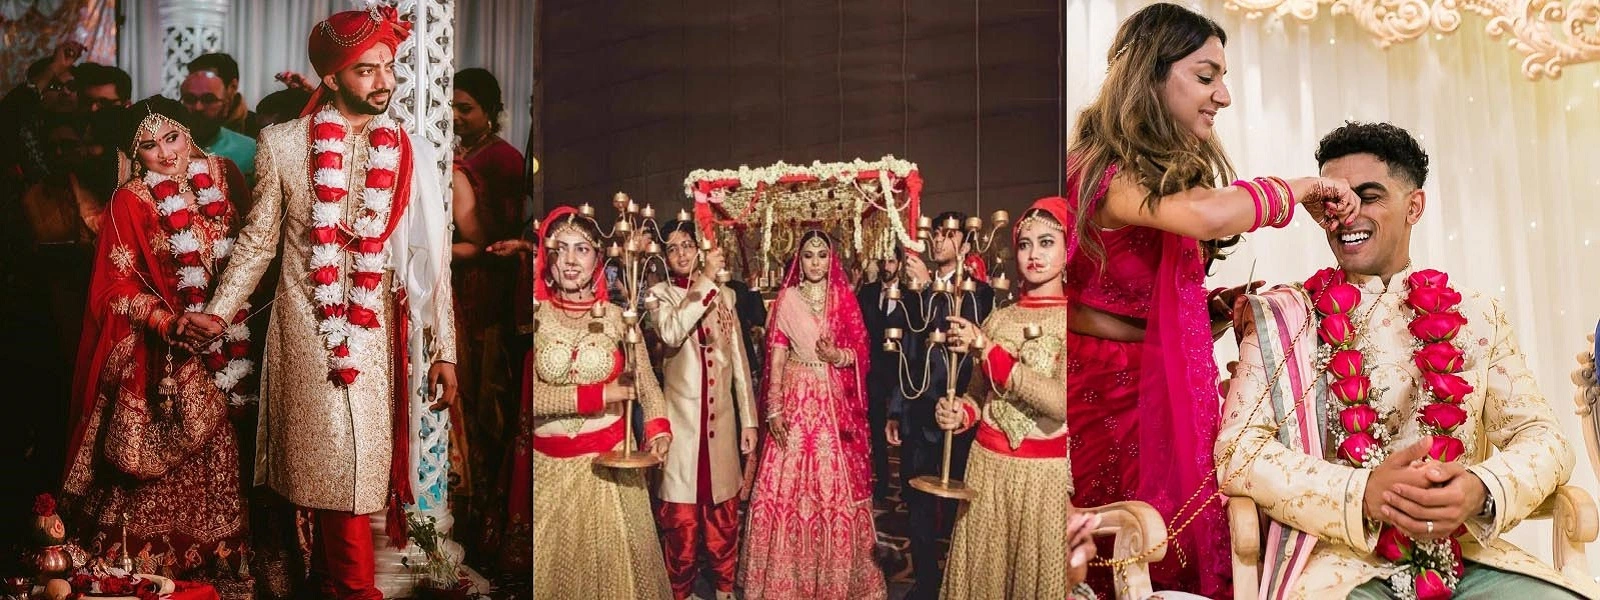 Gujarati wedding images